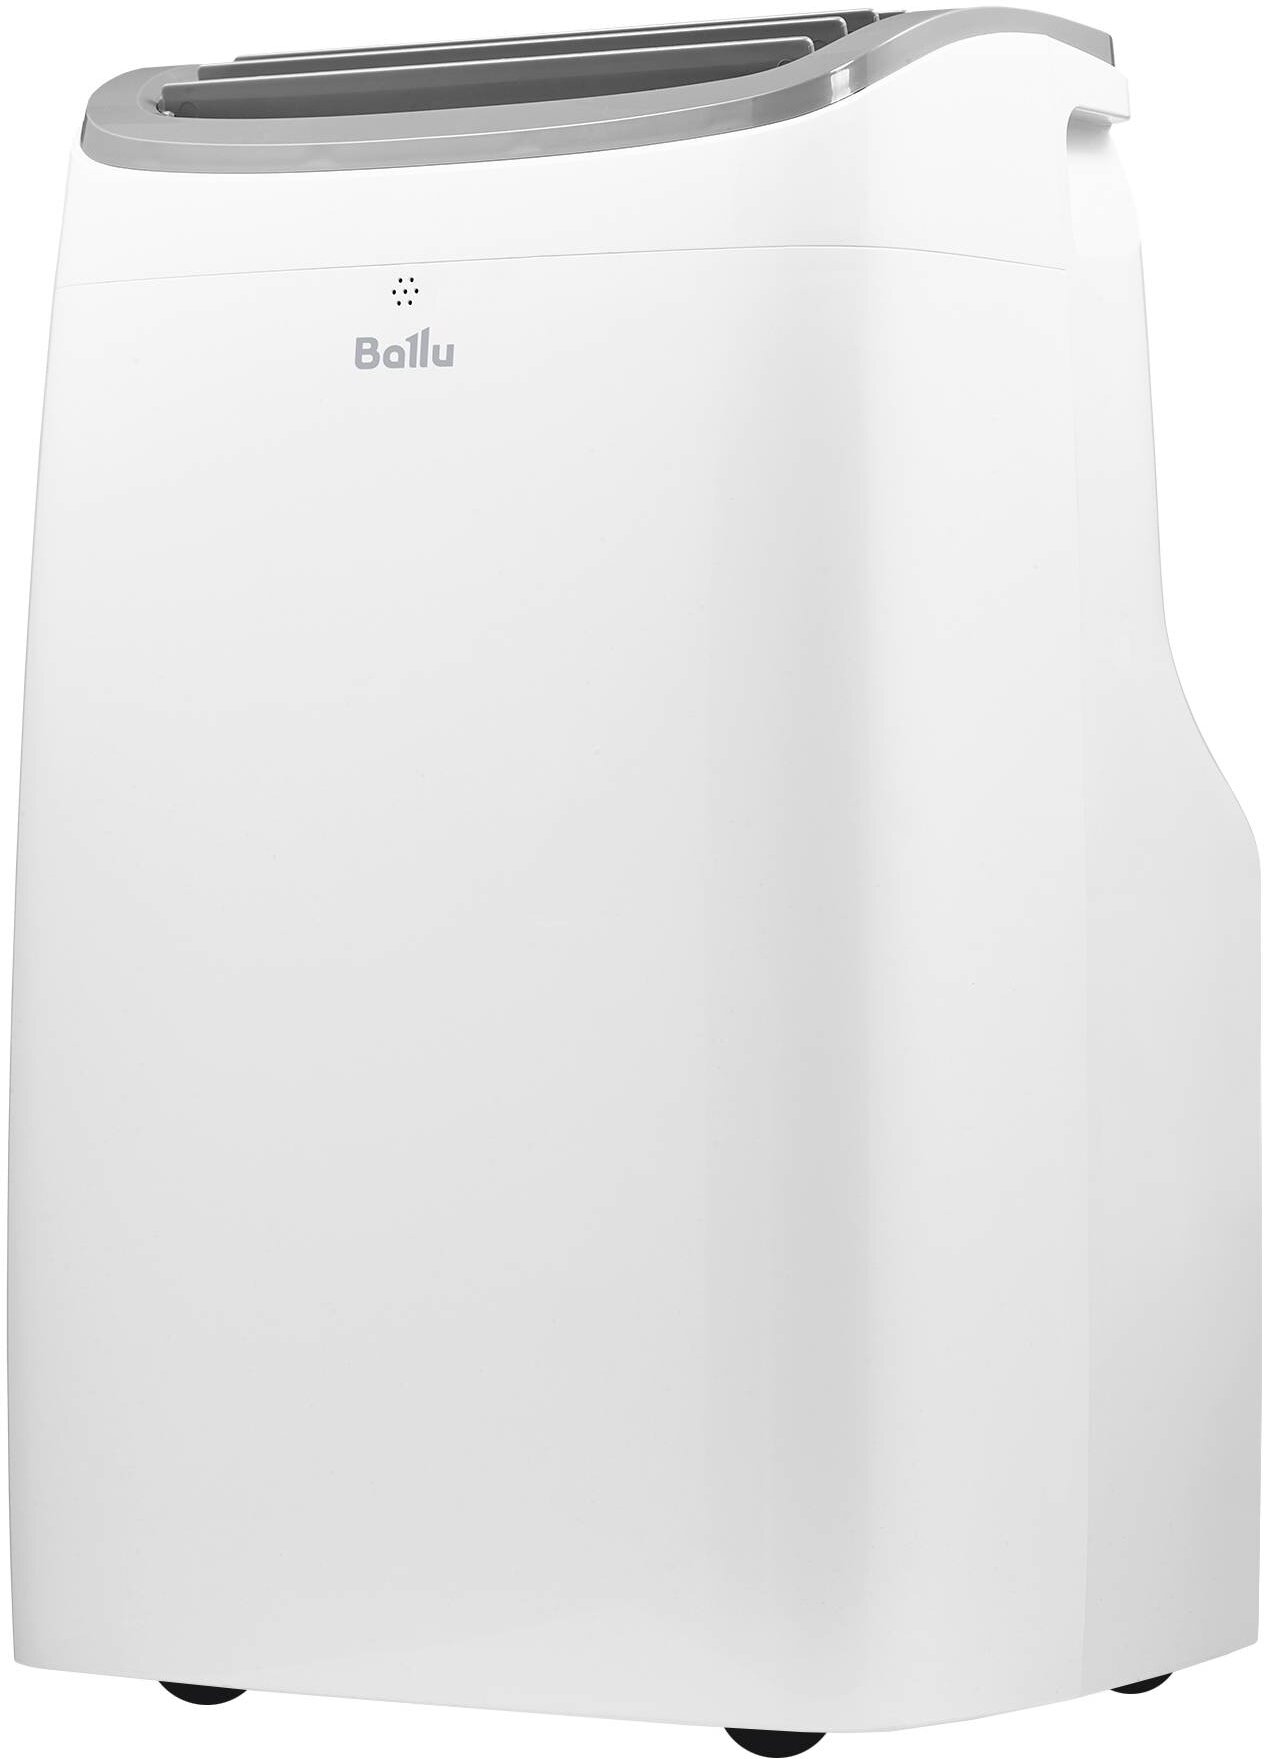 Ballu BPAC-12 SA/N1 мобильный кондиционер мощностью 35 м2 - 3.5 кВт - фотография № 1